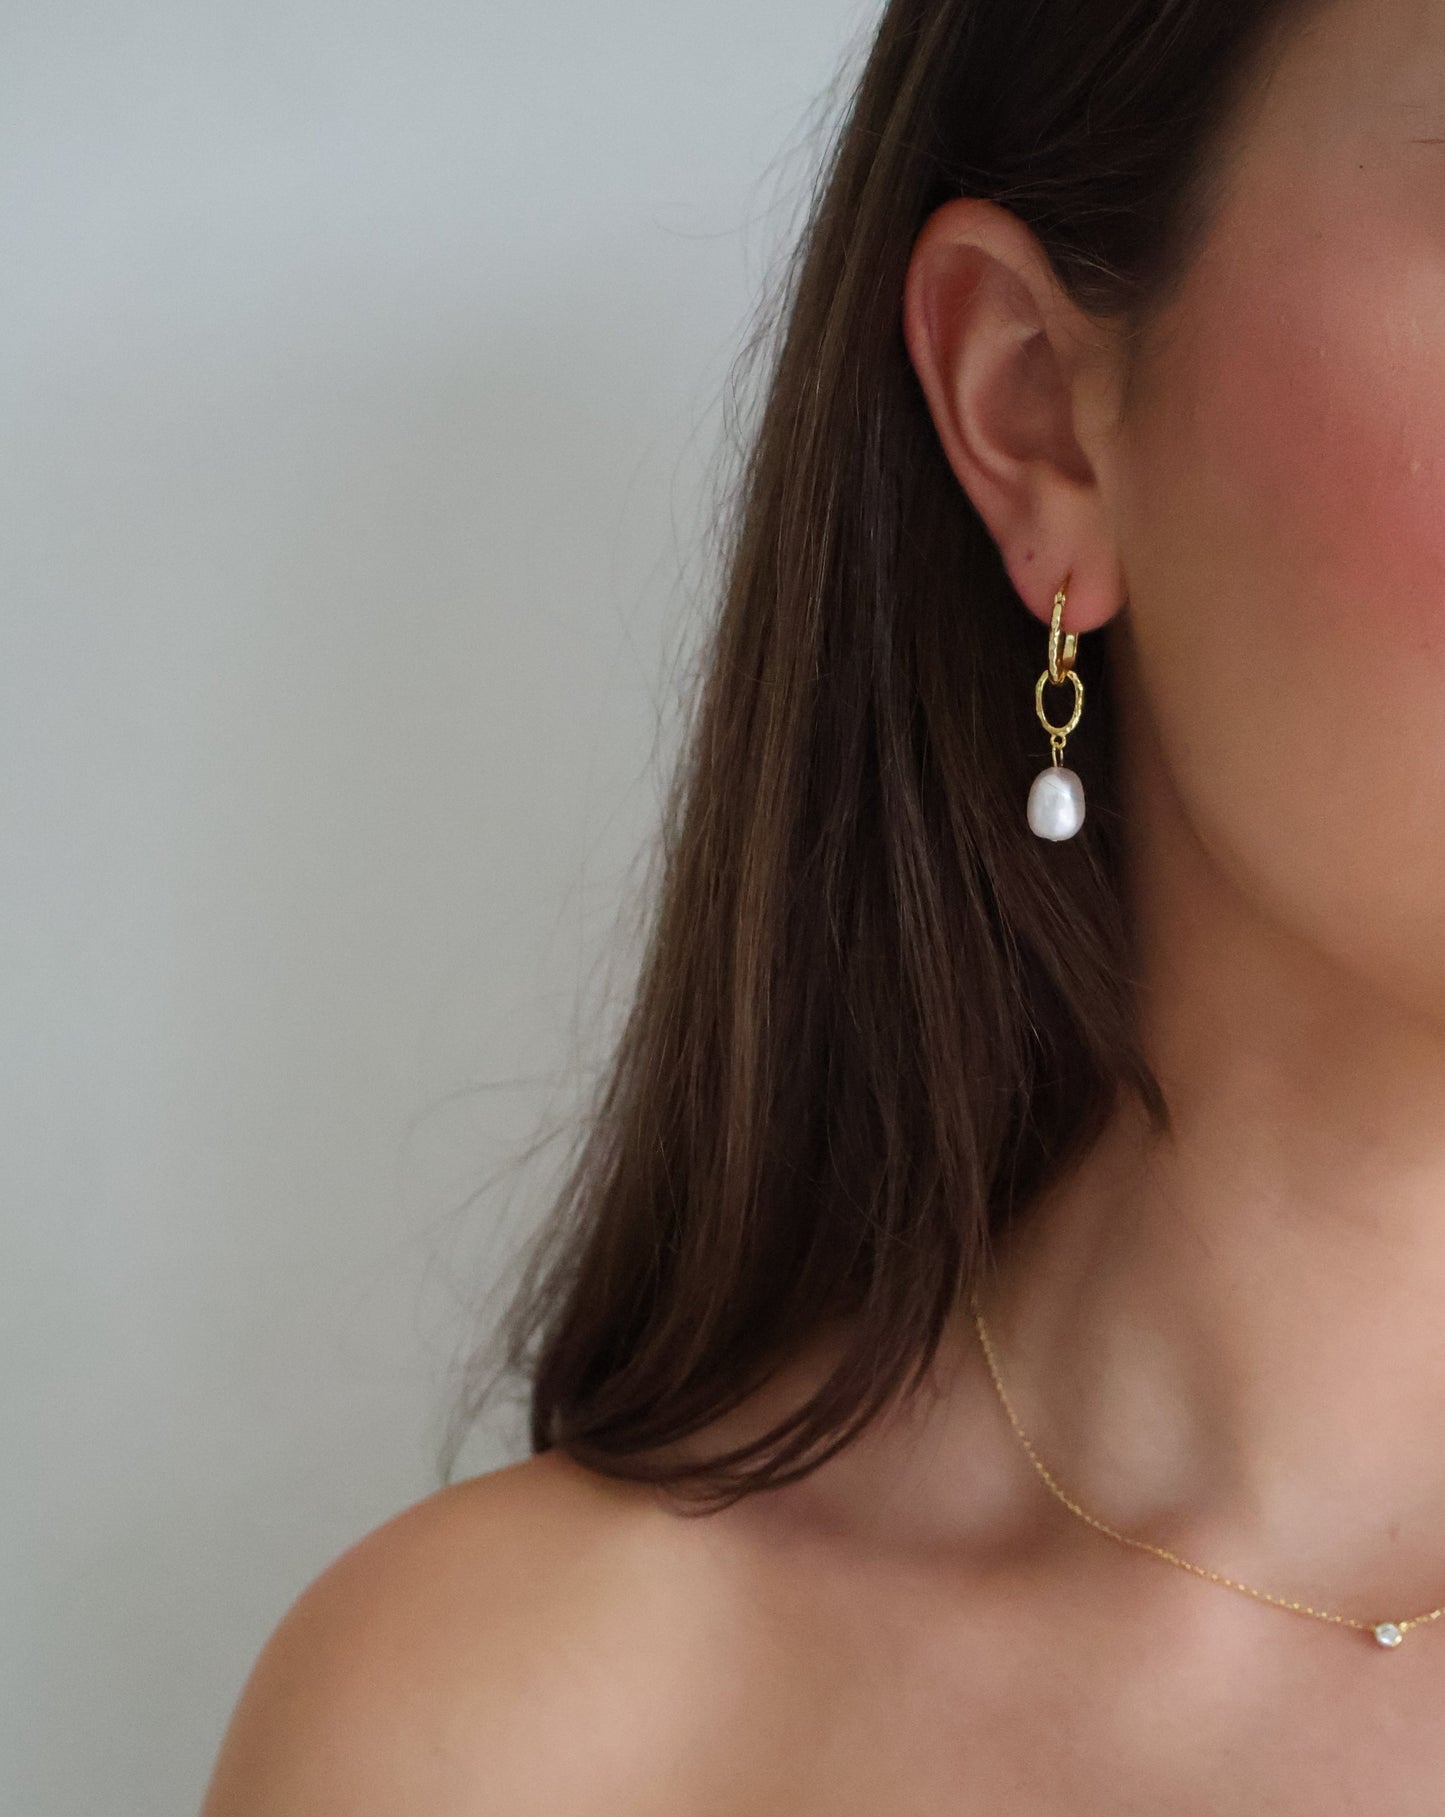 Portsea earrings